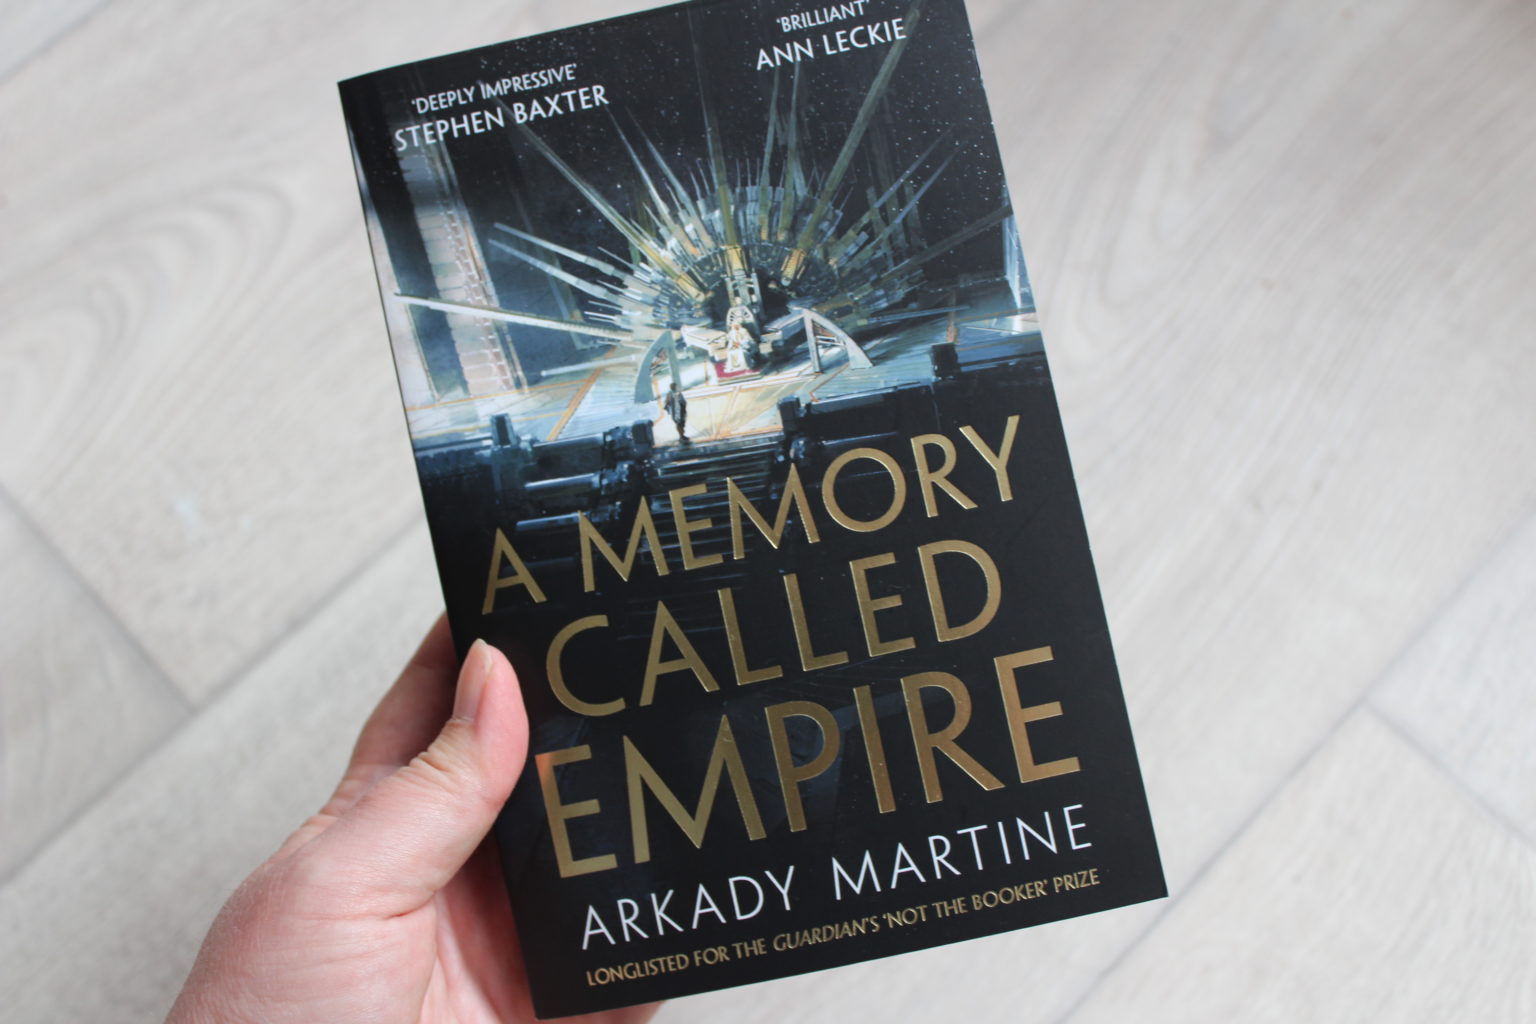 a memory called empire book 2